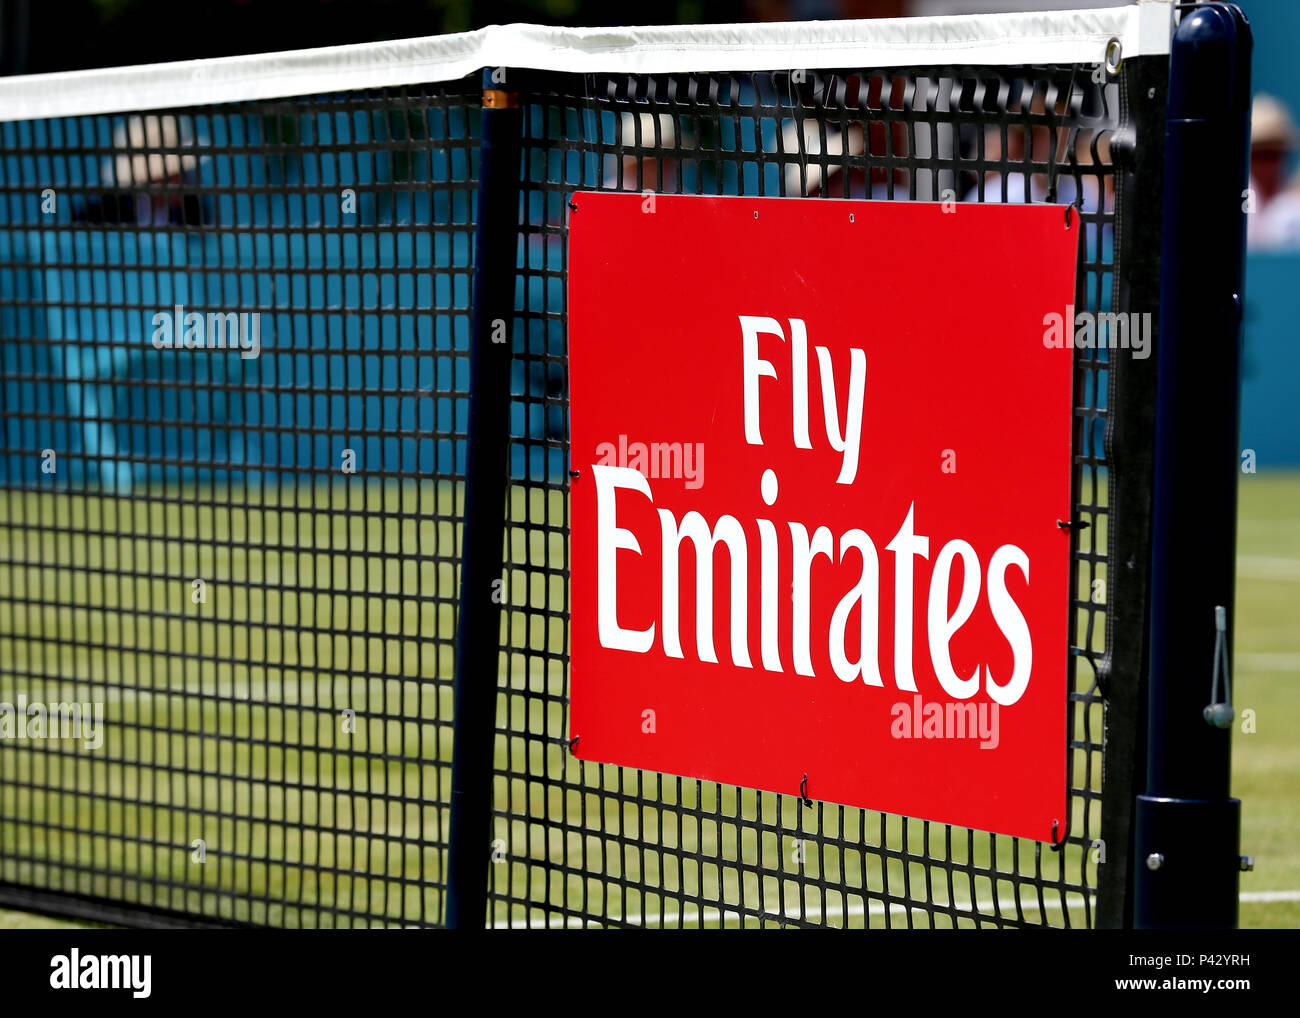 Atp world tour tennis net hi-res stock photography and images - Alamy